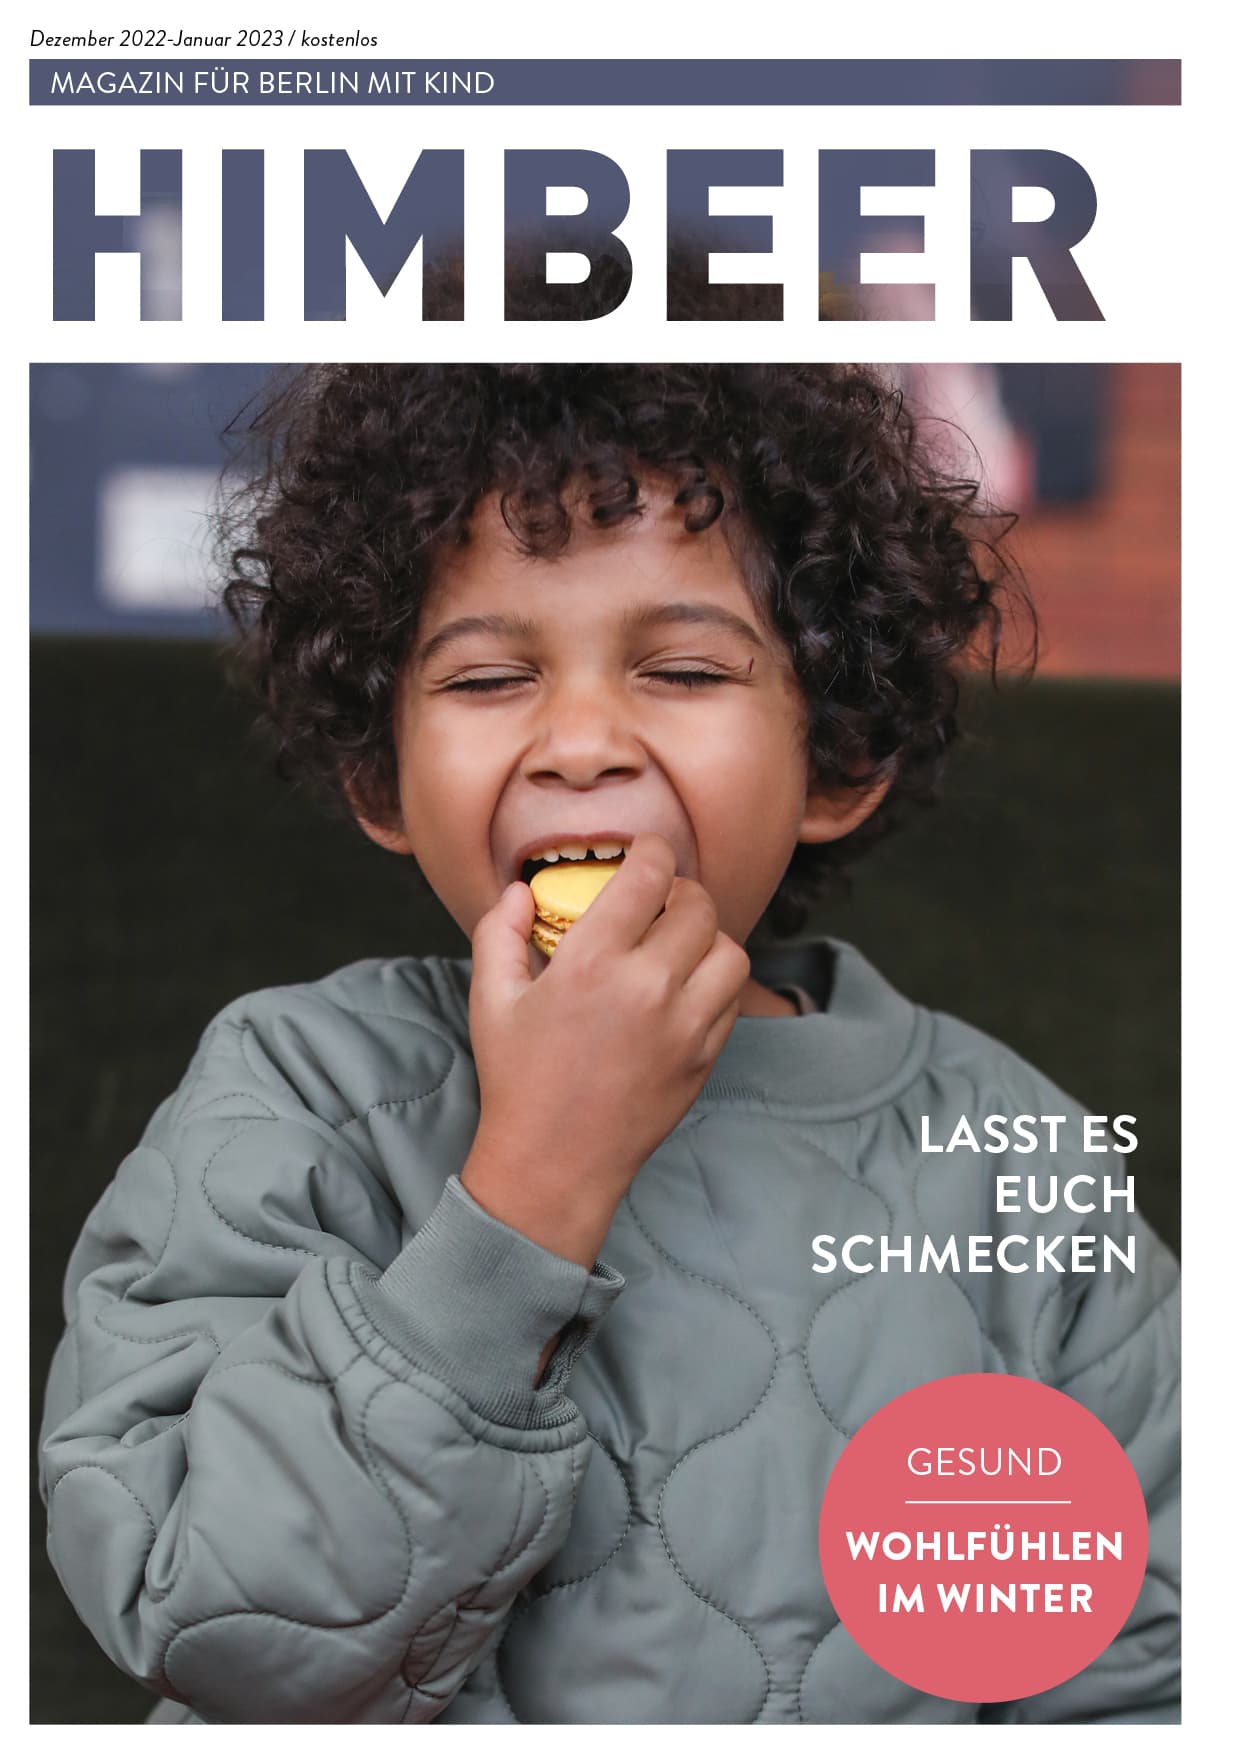 HIMBEER Familienmagazin für BERLIN MIT Kind Dezember 2022-Januar 2023 // HIMBEER